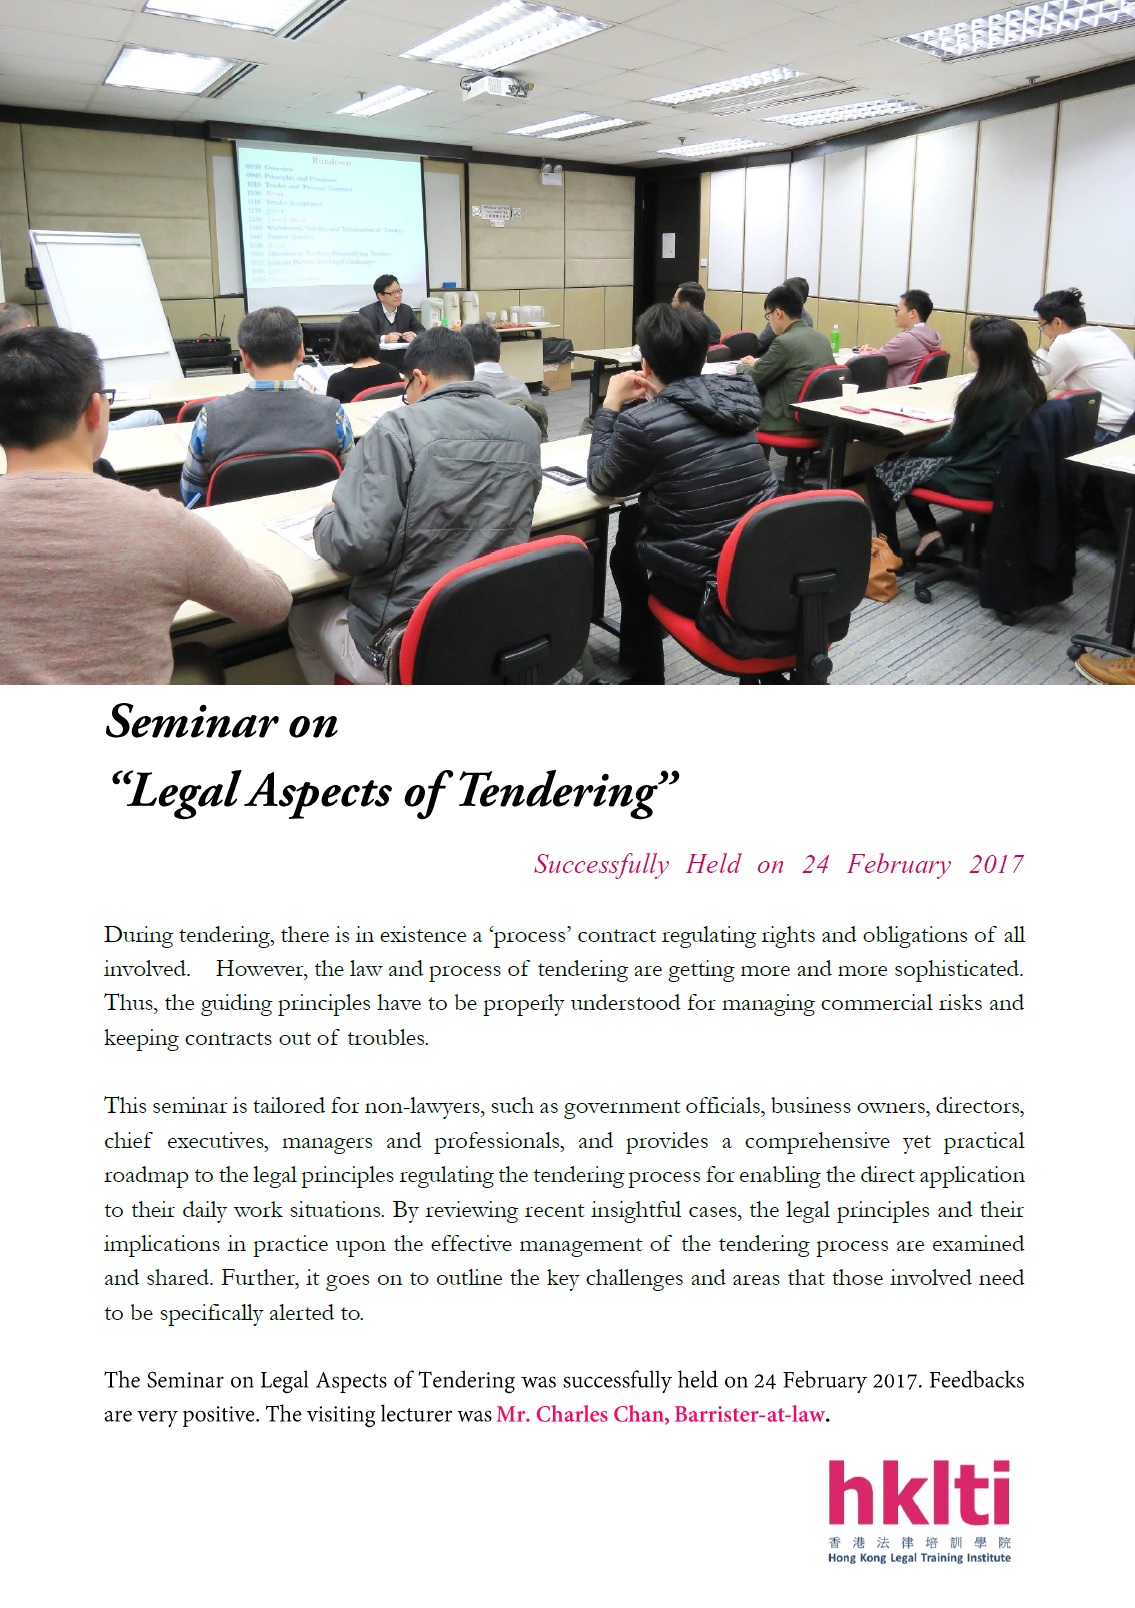 hklti hkie legal aspects of tendering 20170224 seminar report